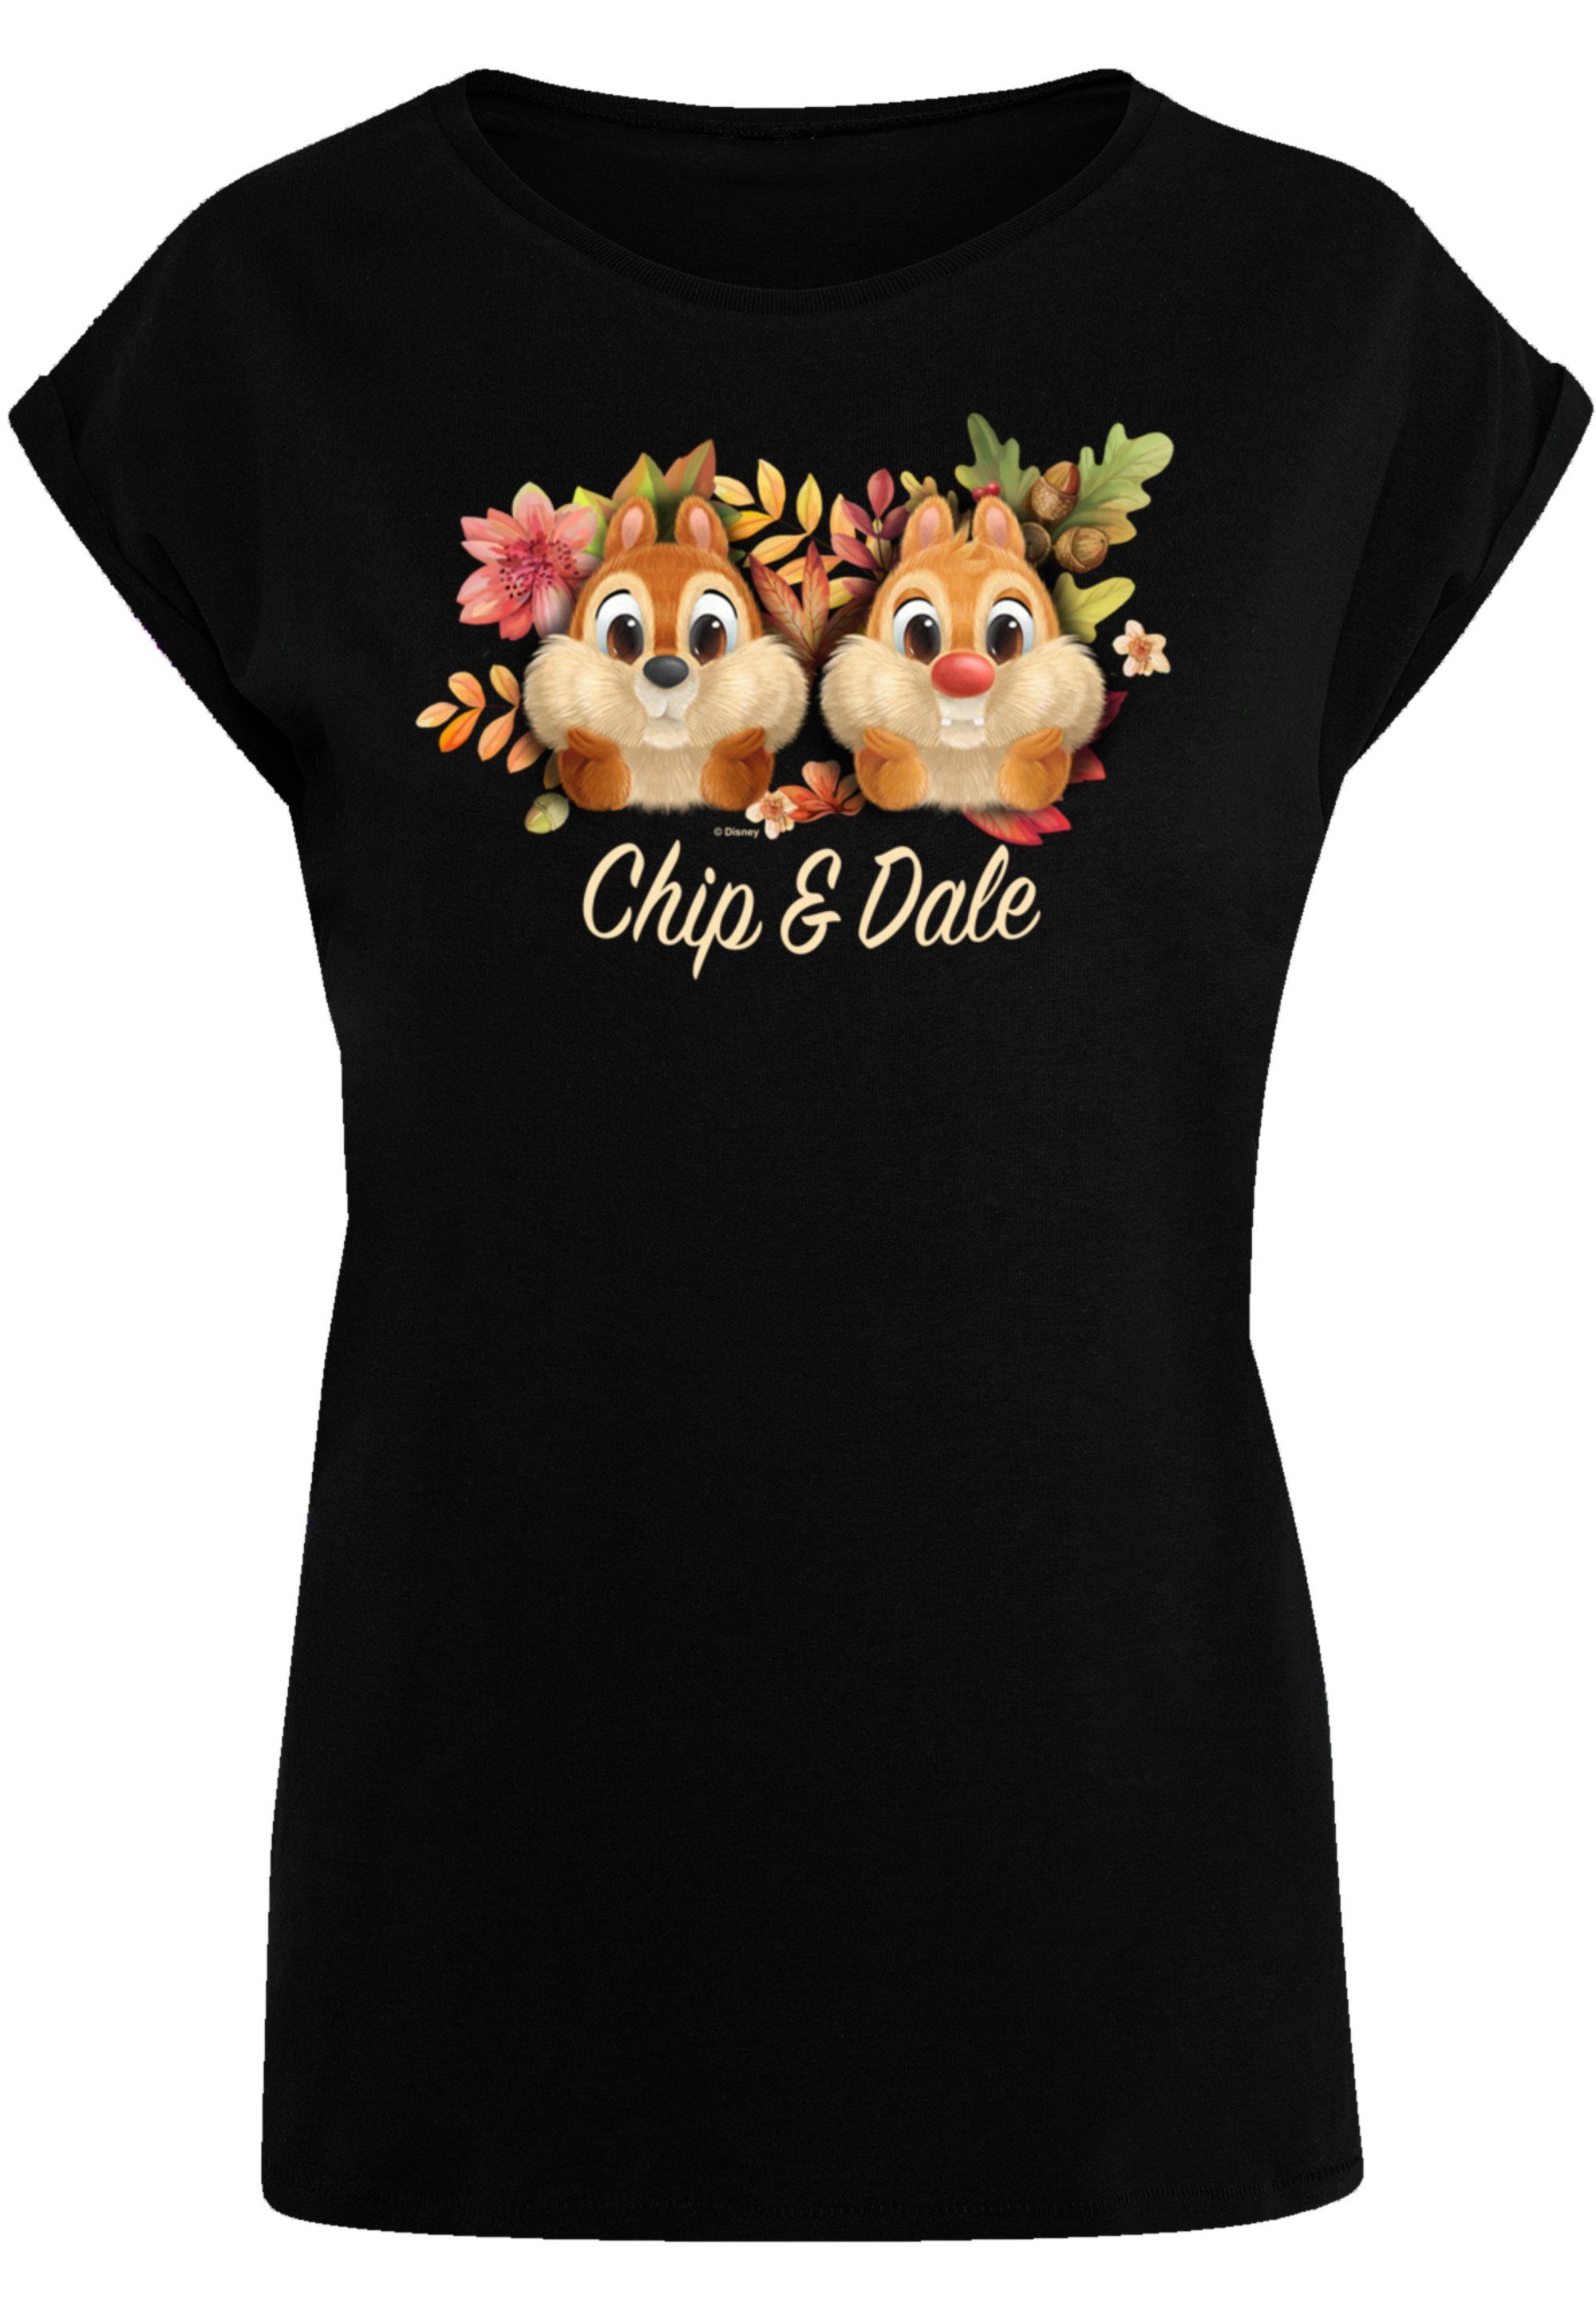 T-Shirt Disney Premium Chip Qualität F4NT4STIC Chap Duo und